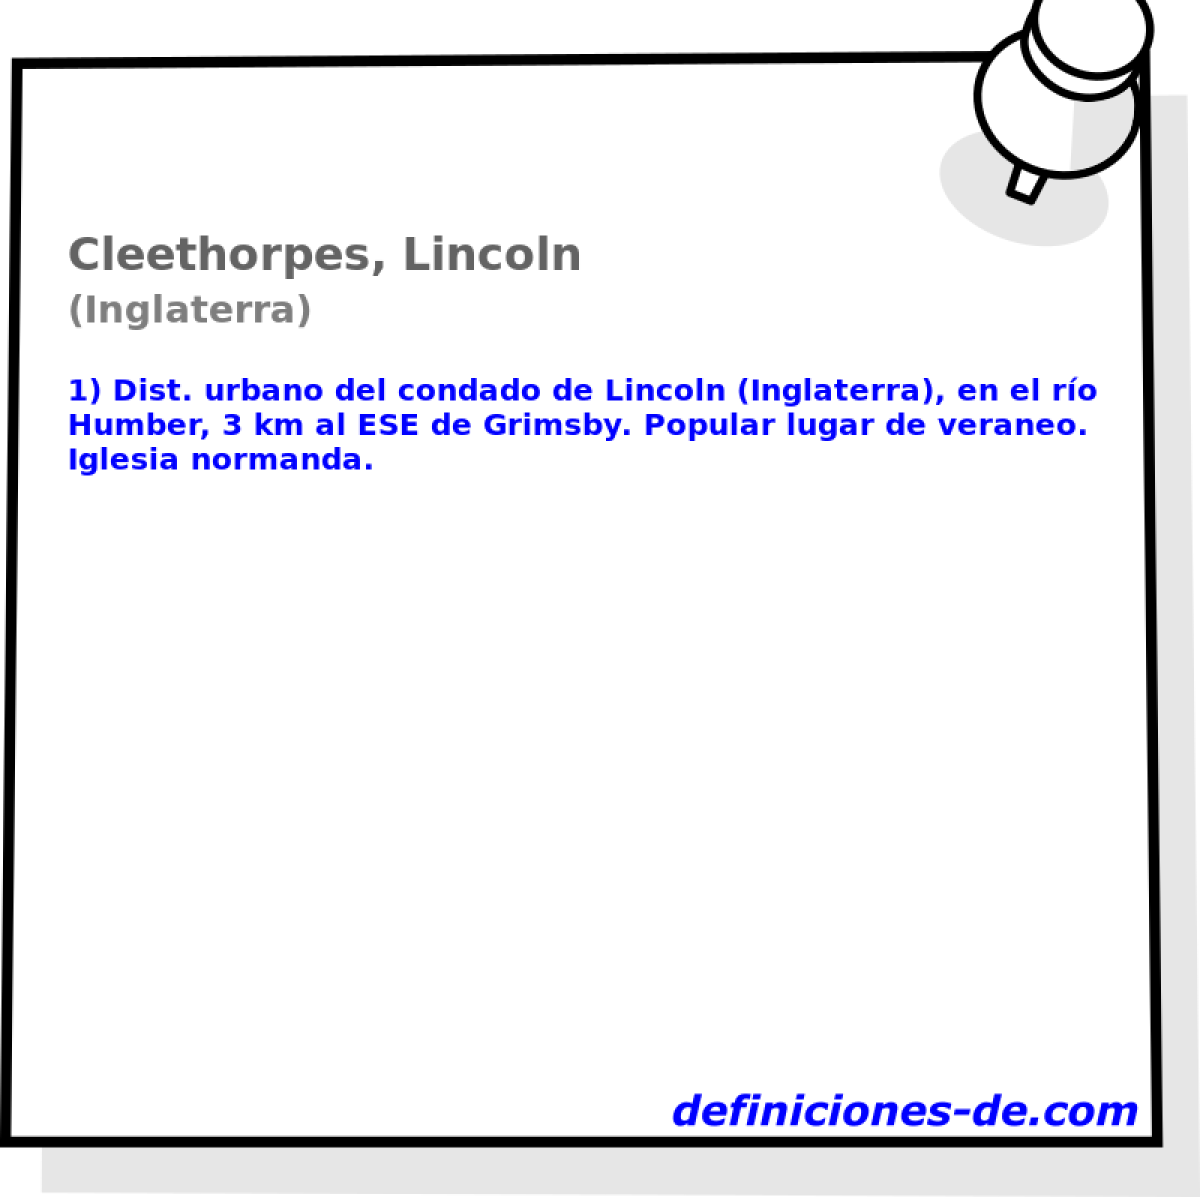 Cleethorpes, Lincoln (Inglaterra)